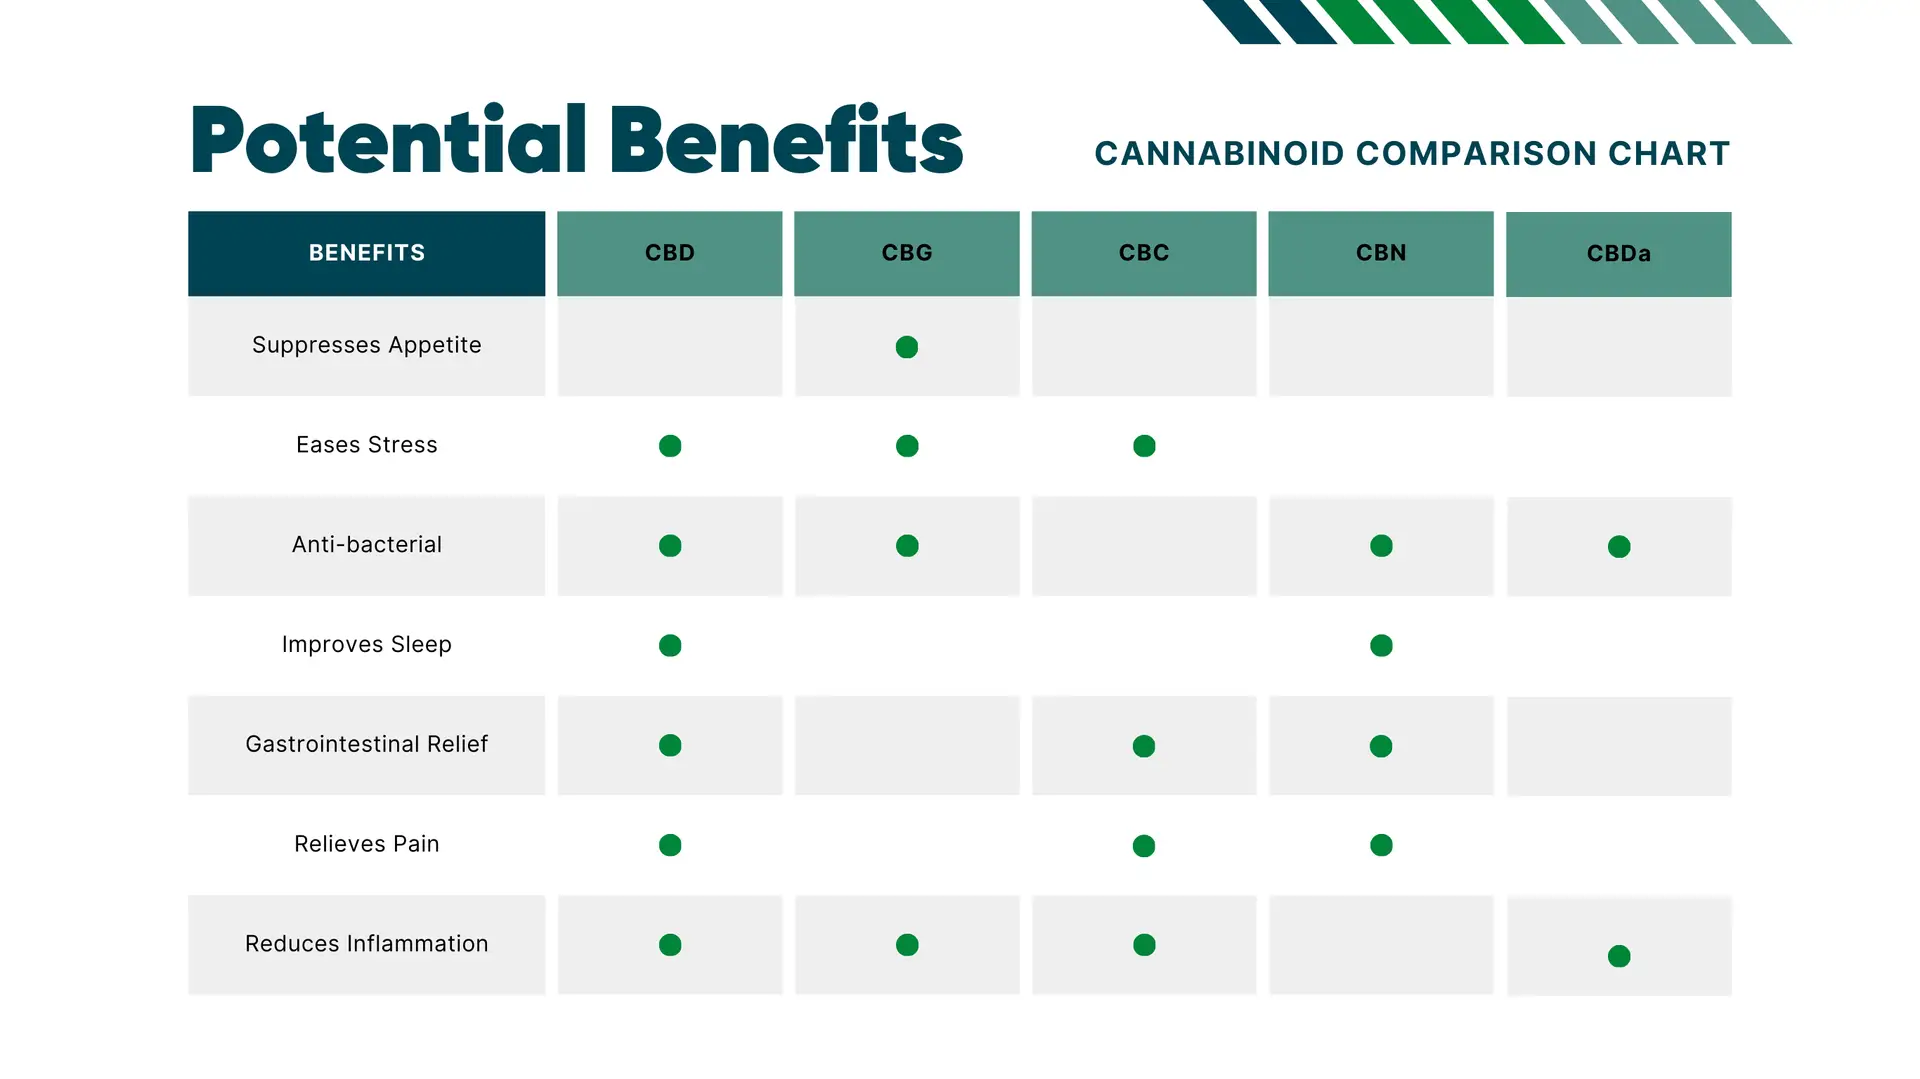 Cannabinoids comparison chart